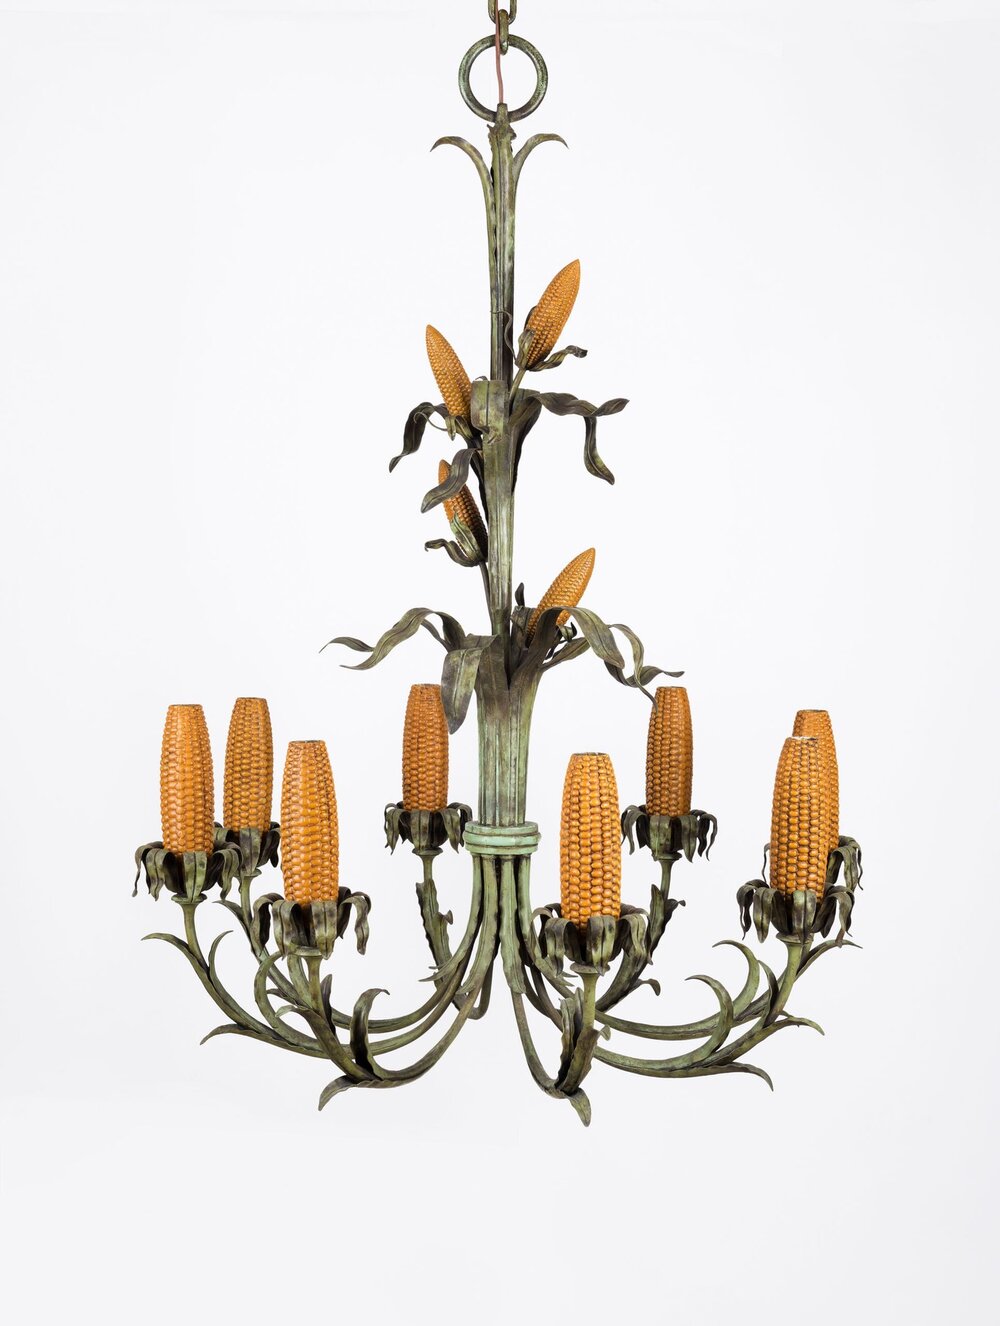 Grant Wood, “Corn Cob Chandelier for Iowa Corn Room” (1925)